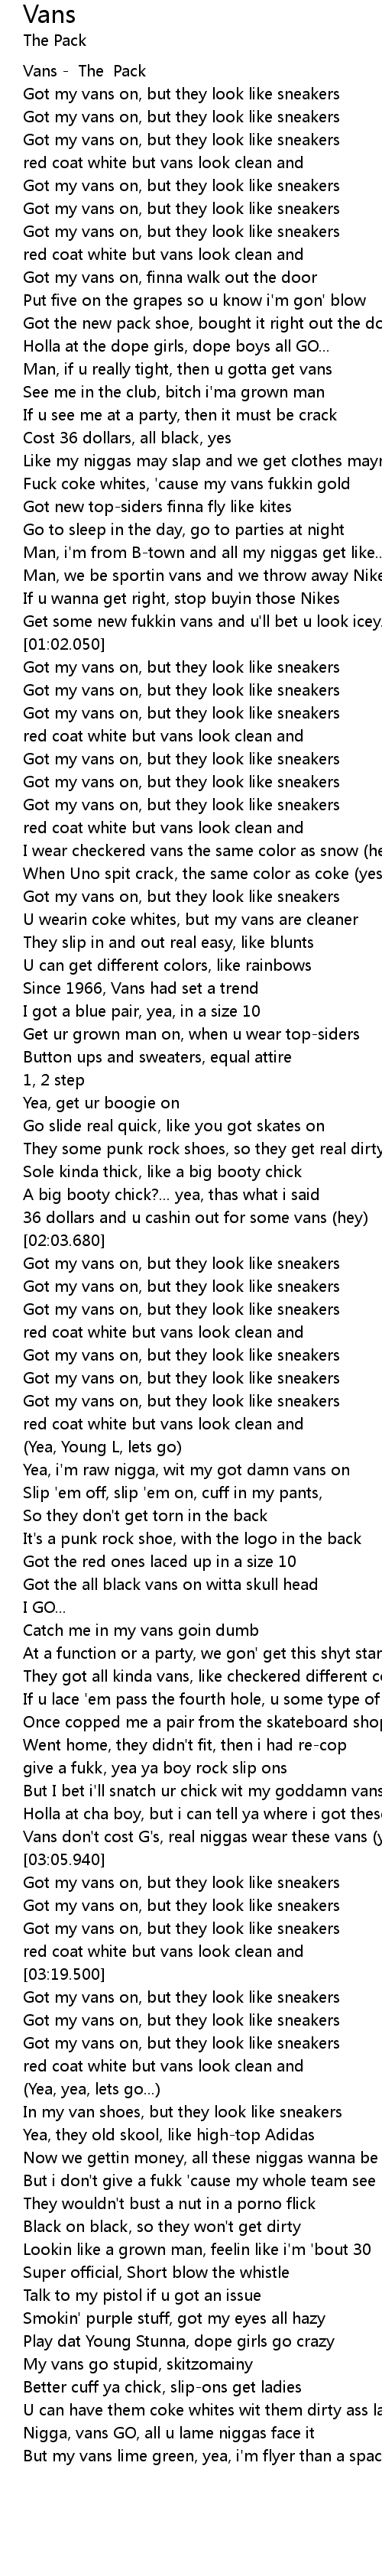 got my vans on but they look like sneakers lyrics